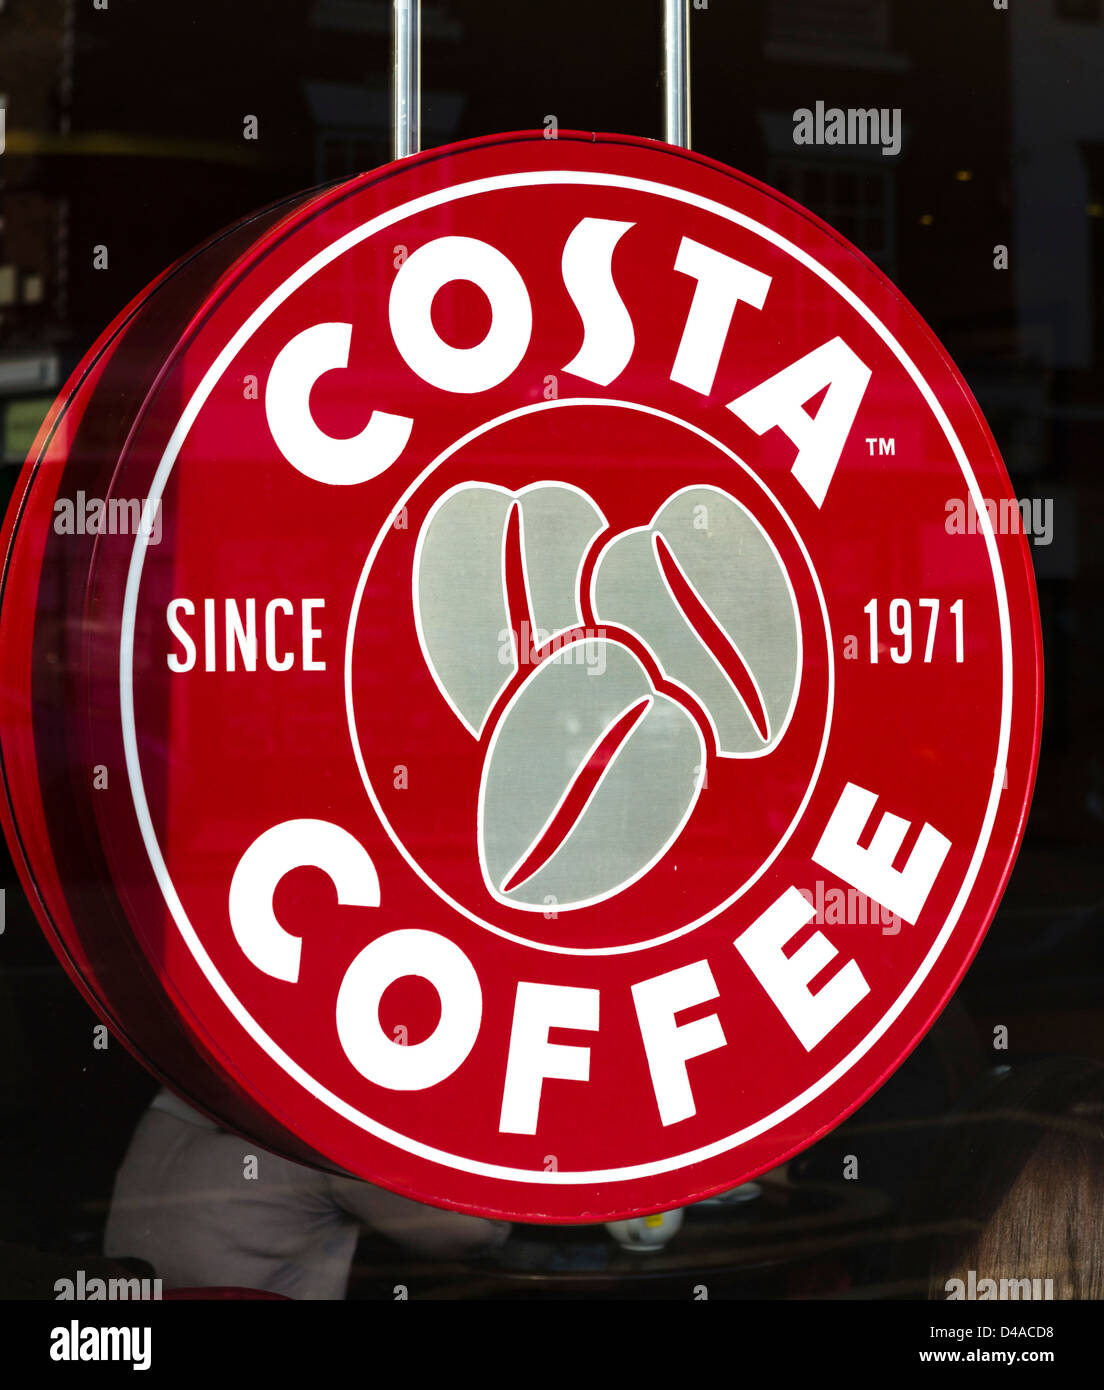 Costa coffee shop, UK Stock Photo